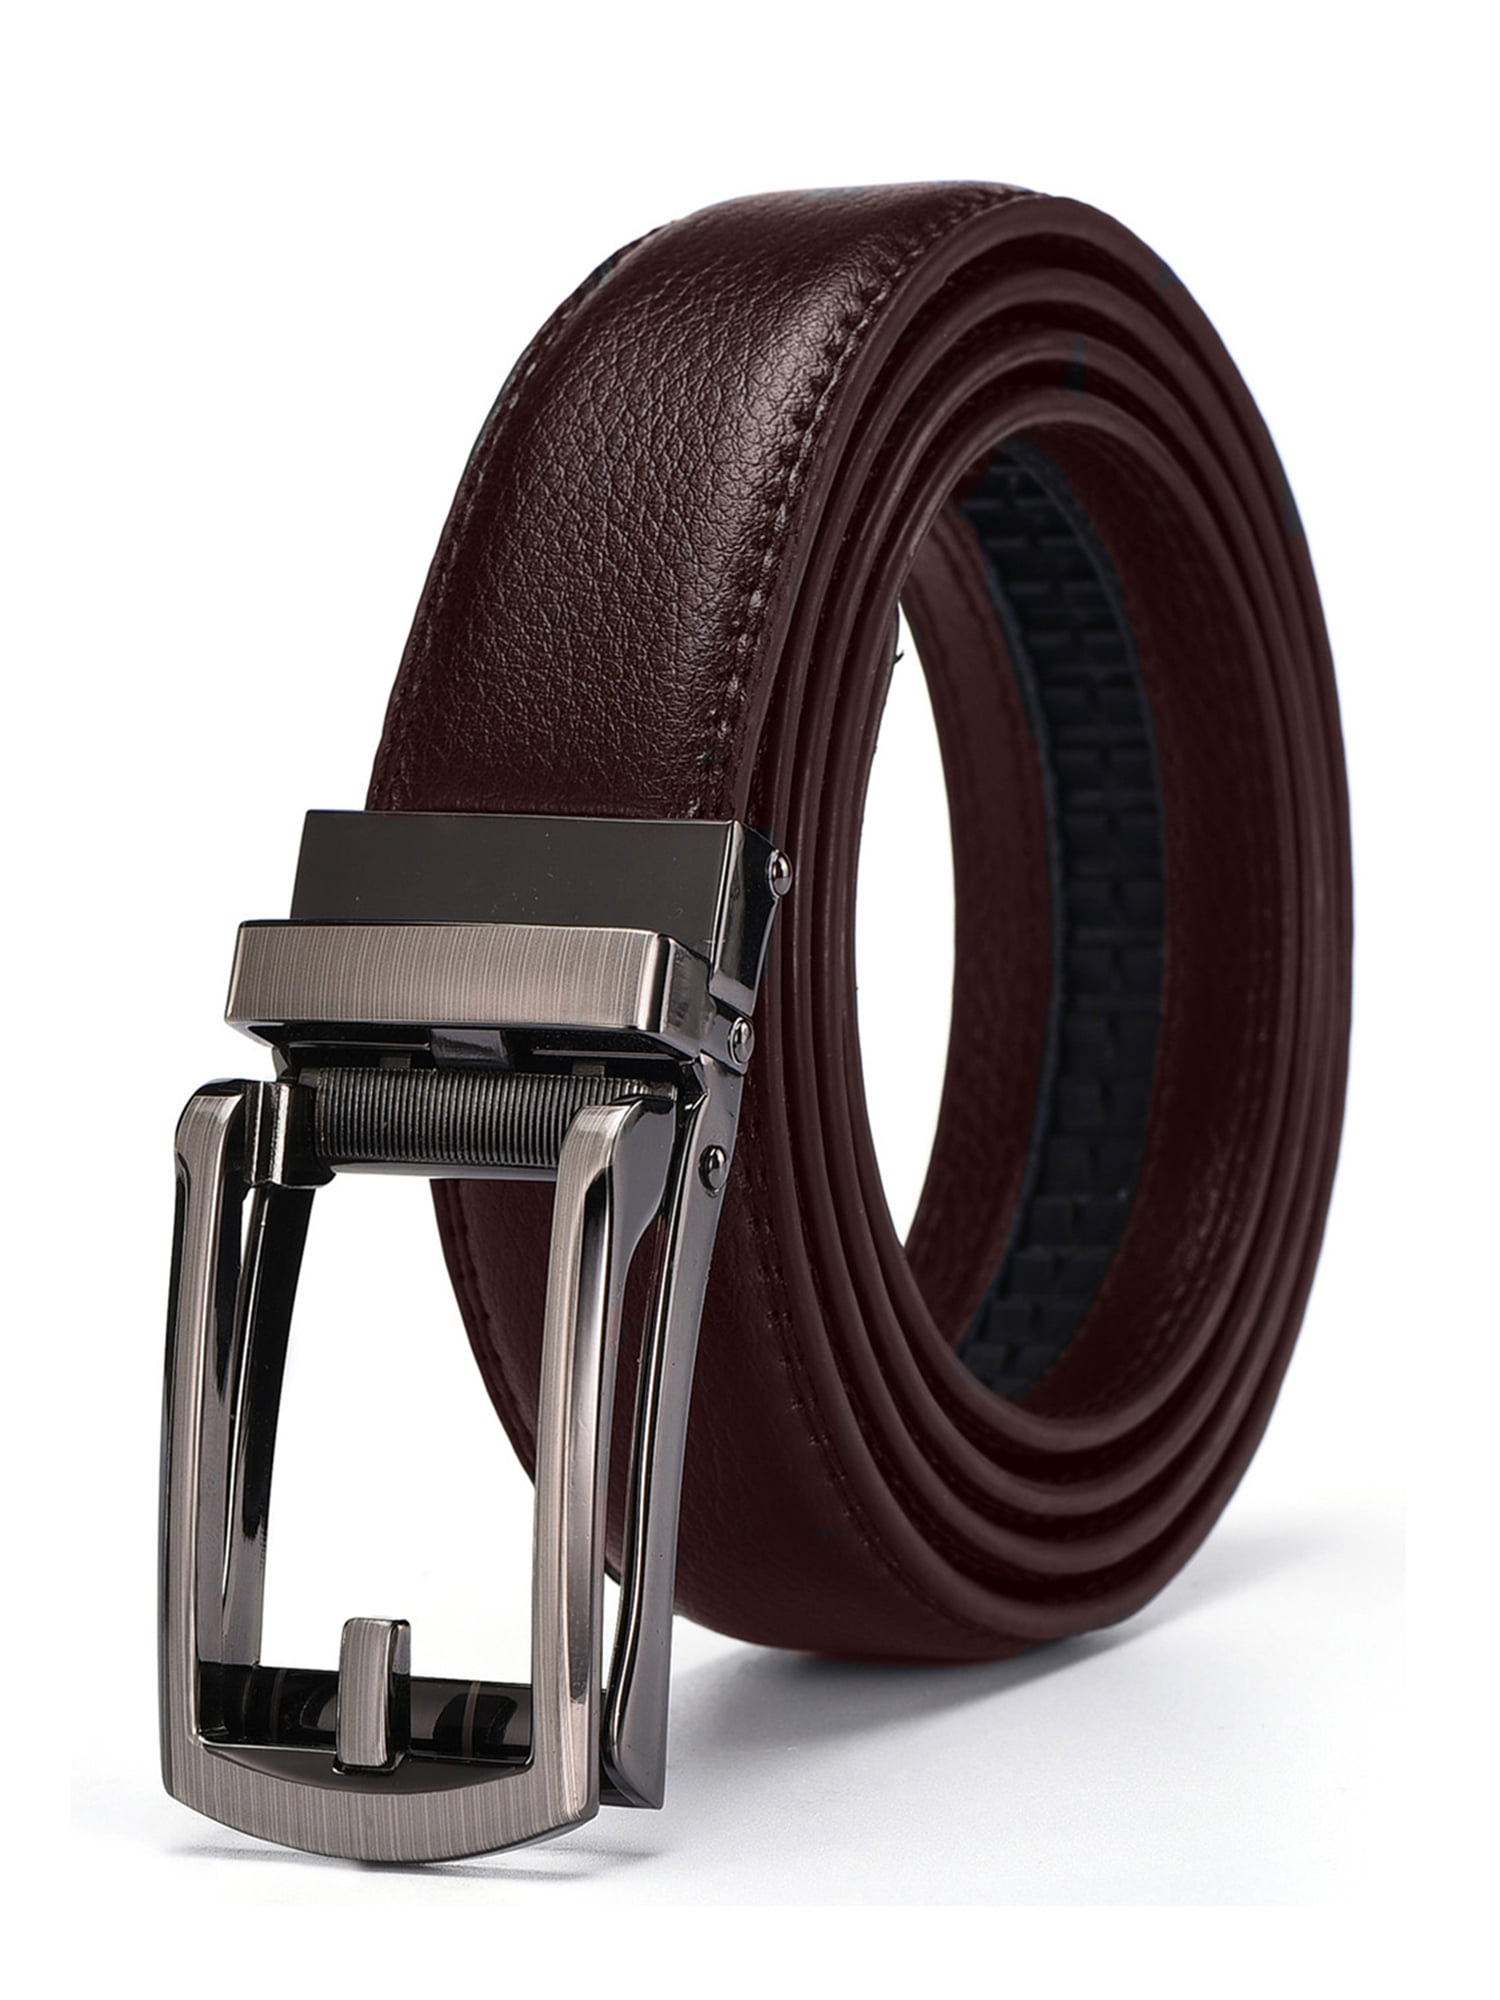 Xhtang 2019 New Style Comfort Click Belt Ratchet Leather Dress Belts ...